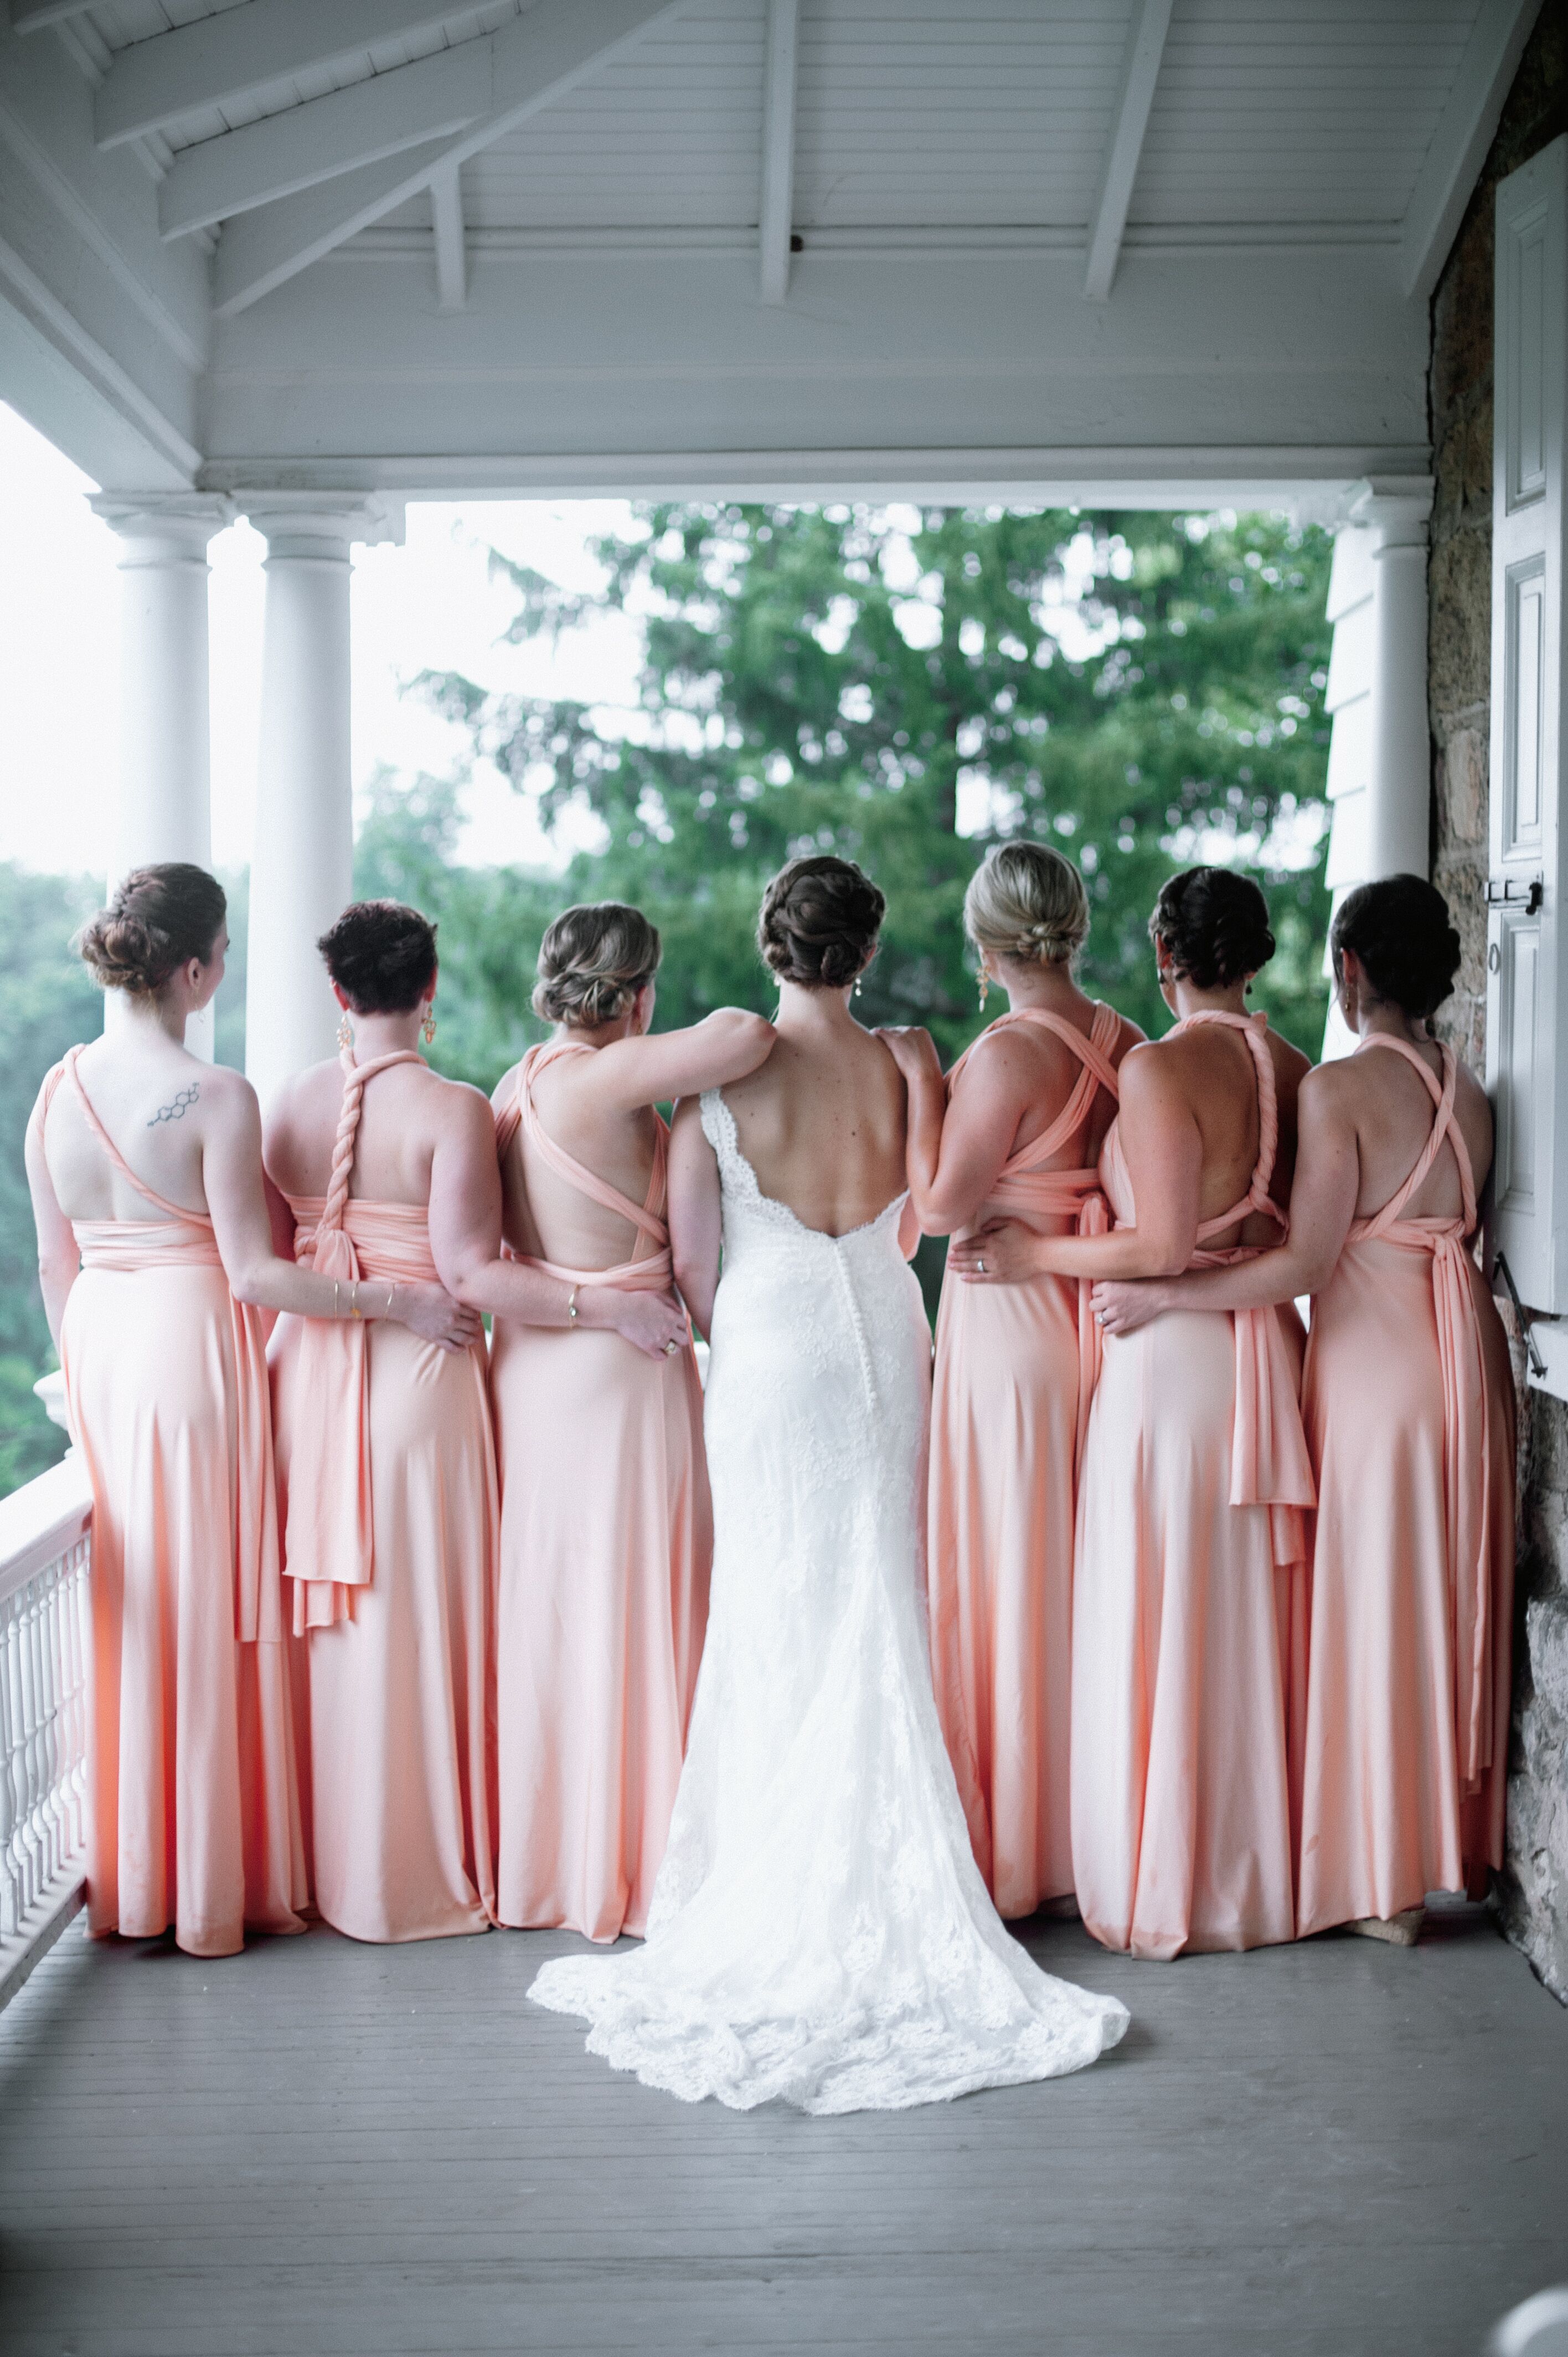 Thoughts on Infinity Dresses?, Weddings, Wedding Attire, Wedding Forums